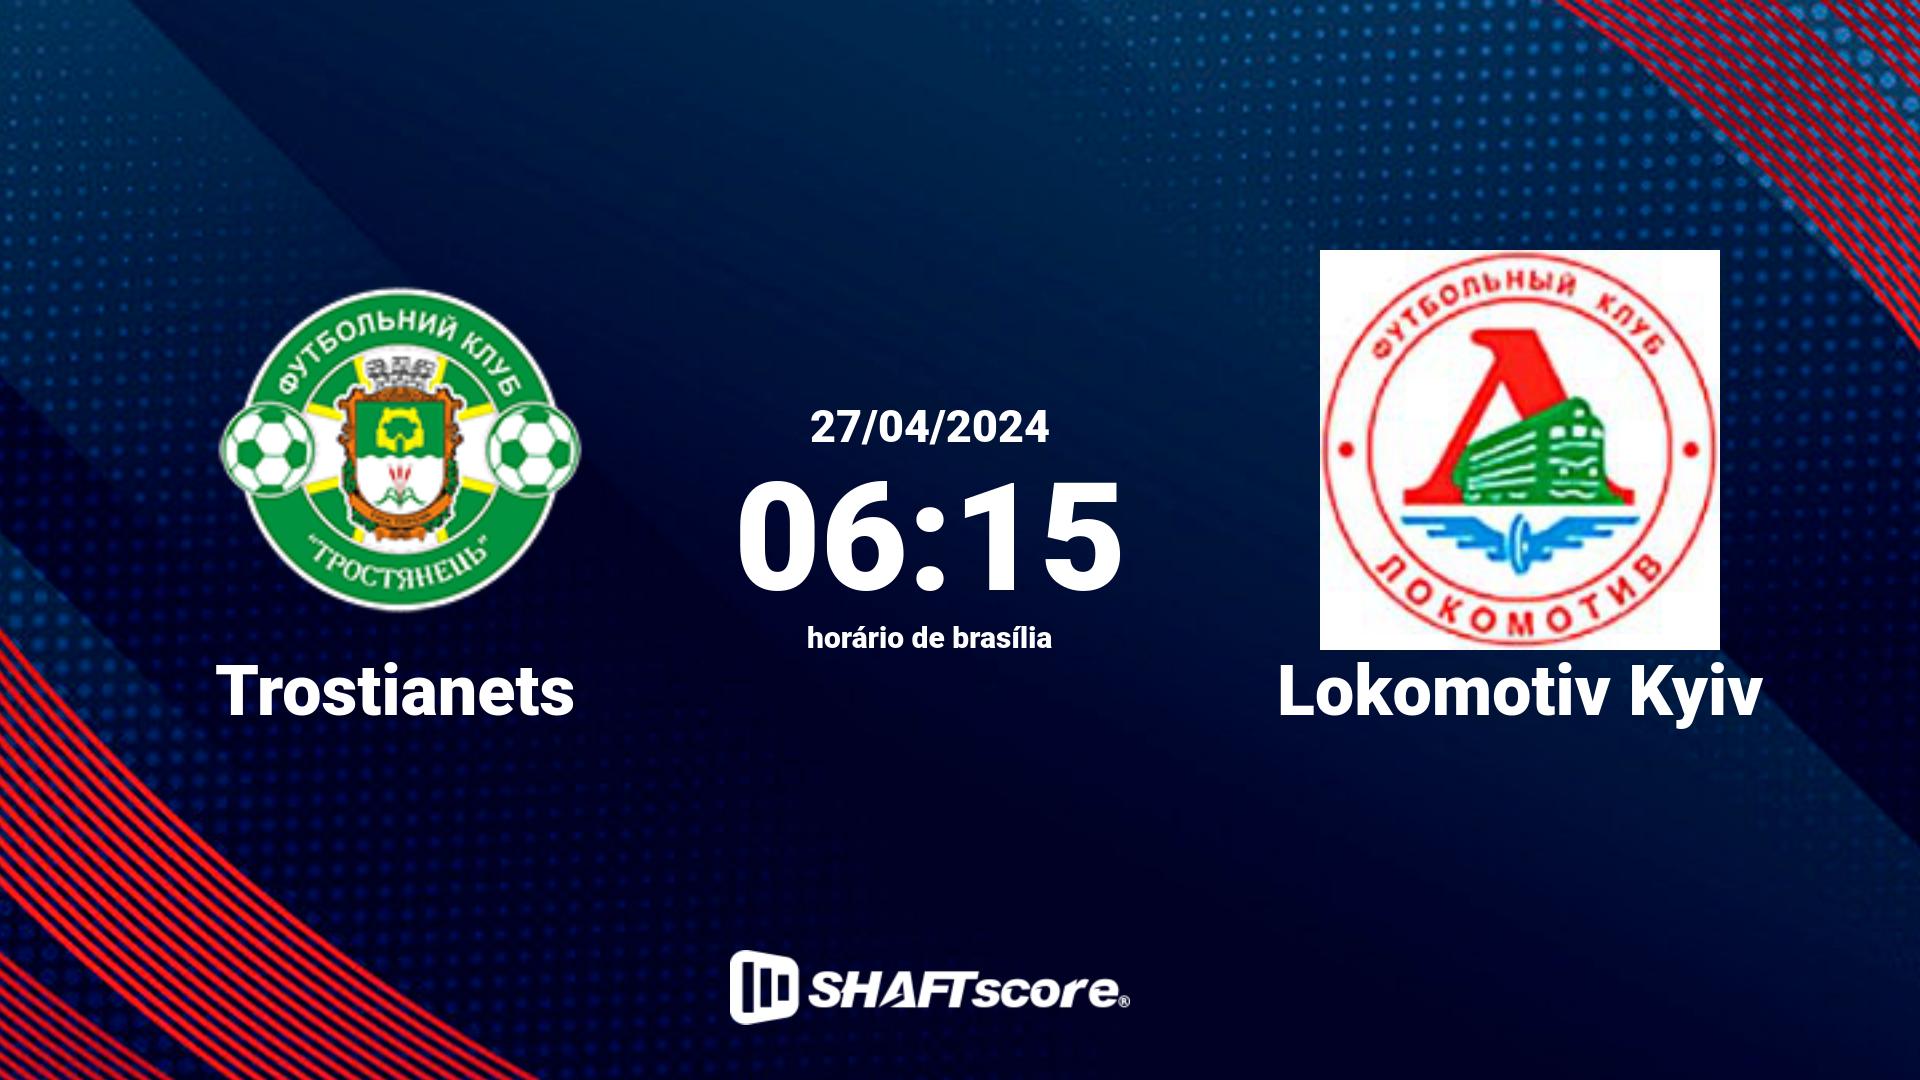 Estatísticas do jogo Trostianets vs Lokomotiv Kyiv 27.04 06:15